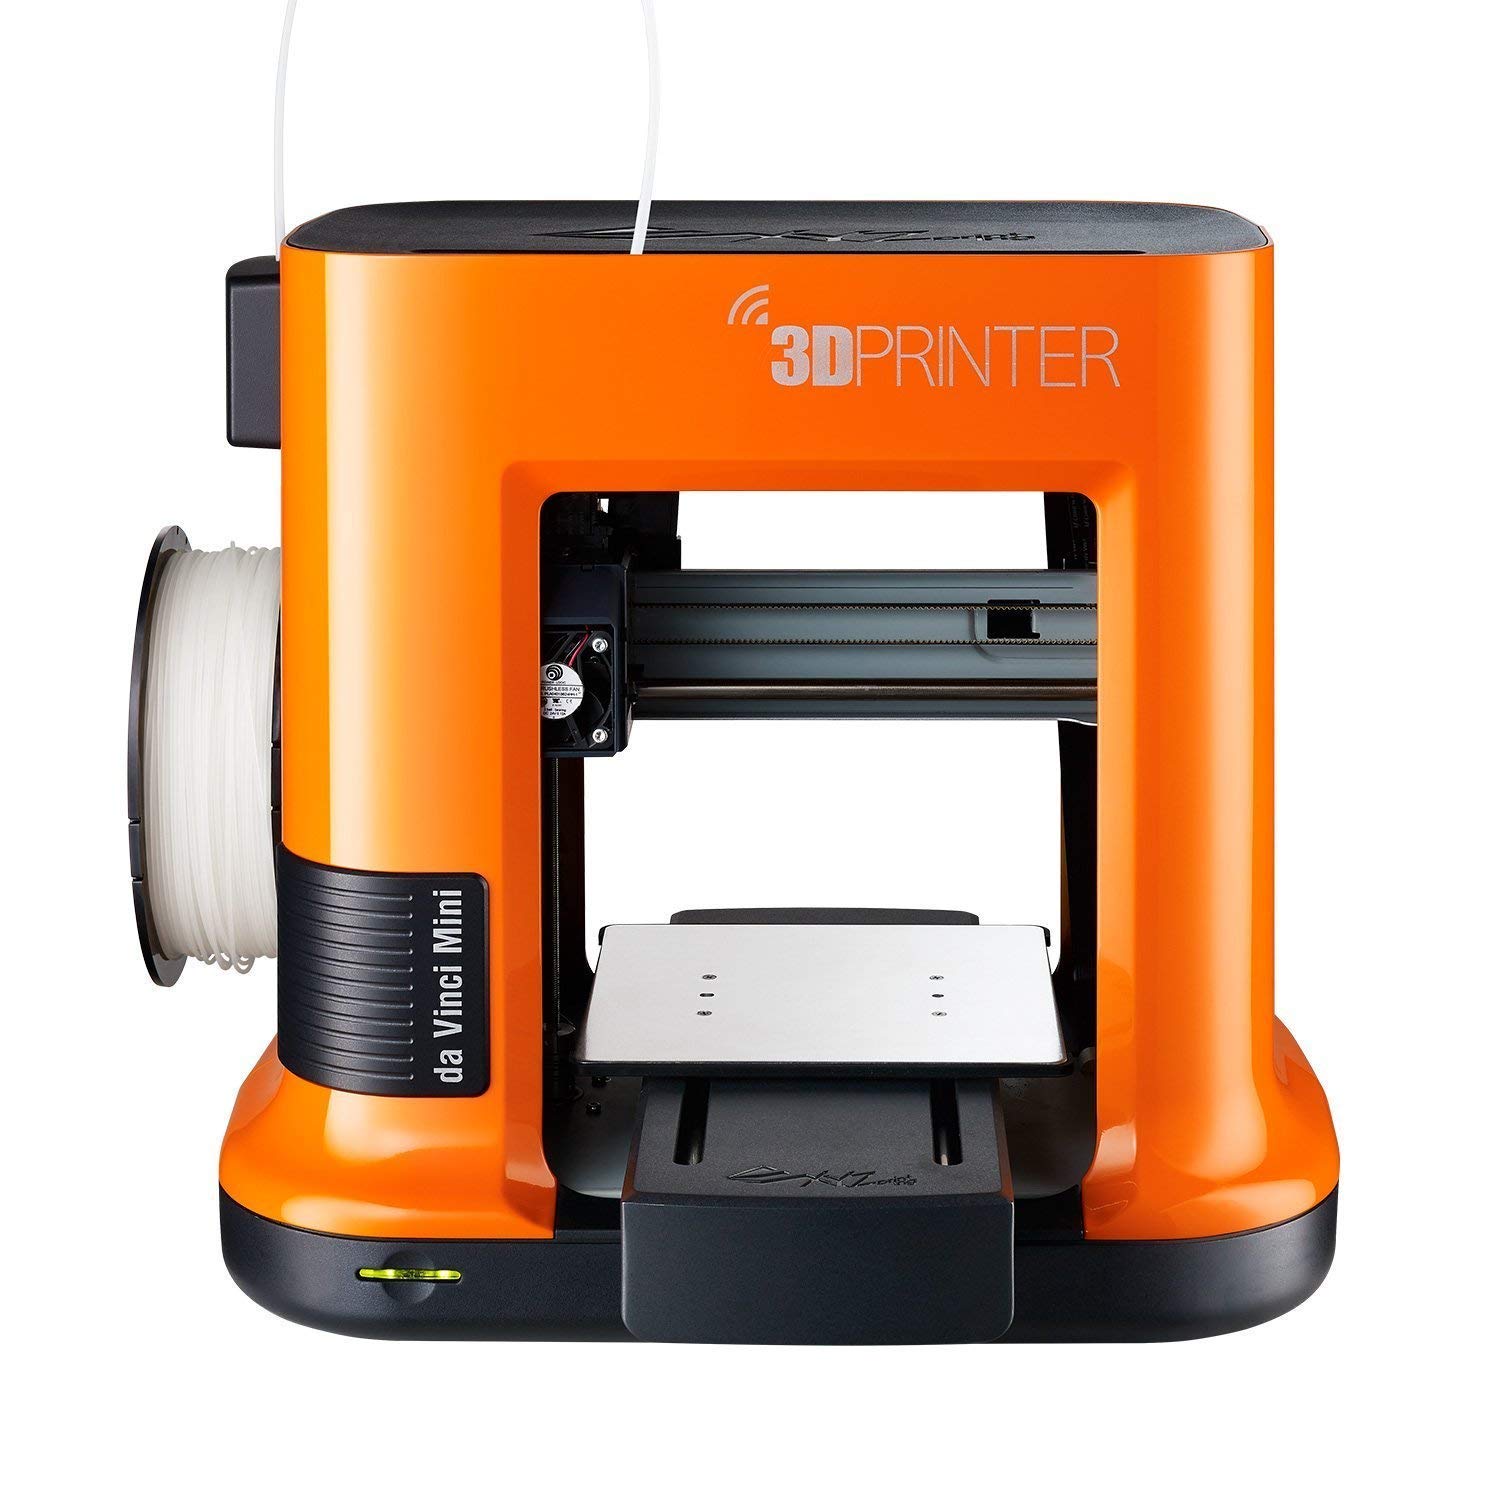 da Vinci mini w+ is a budget 3D printer with a build volume of 150 x 150 x 150 mm.